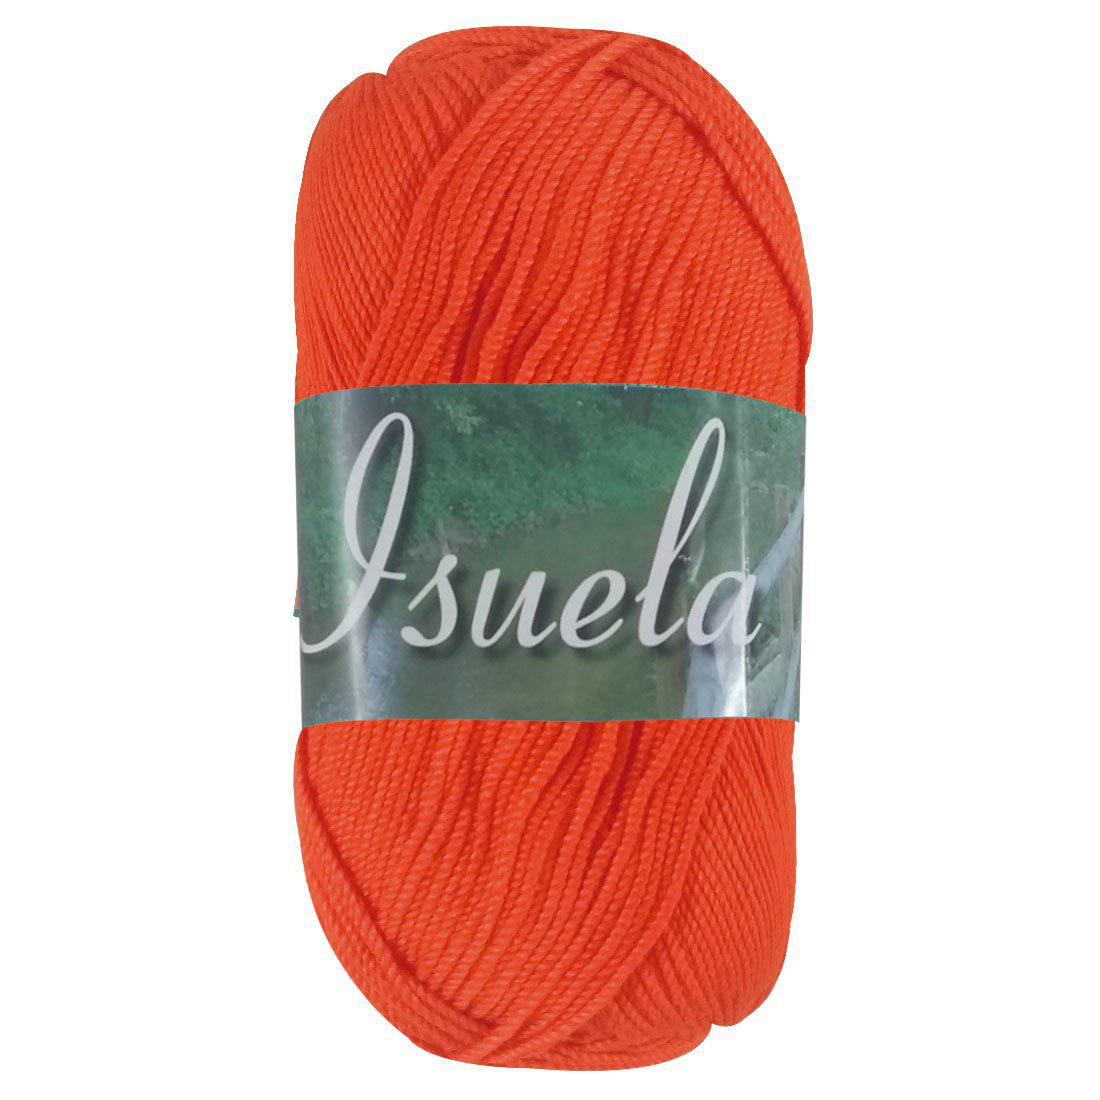 Hilaza Isuela, marca Omega, BOLSA con 5 madejas de 100g con 270m